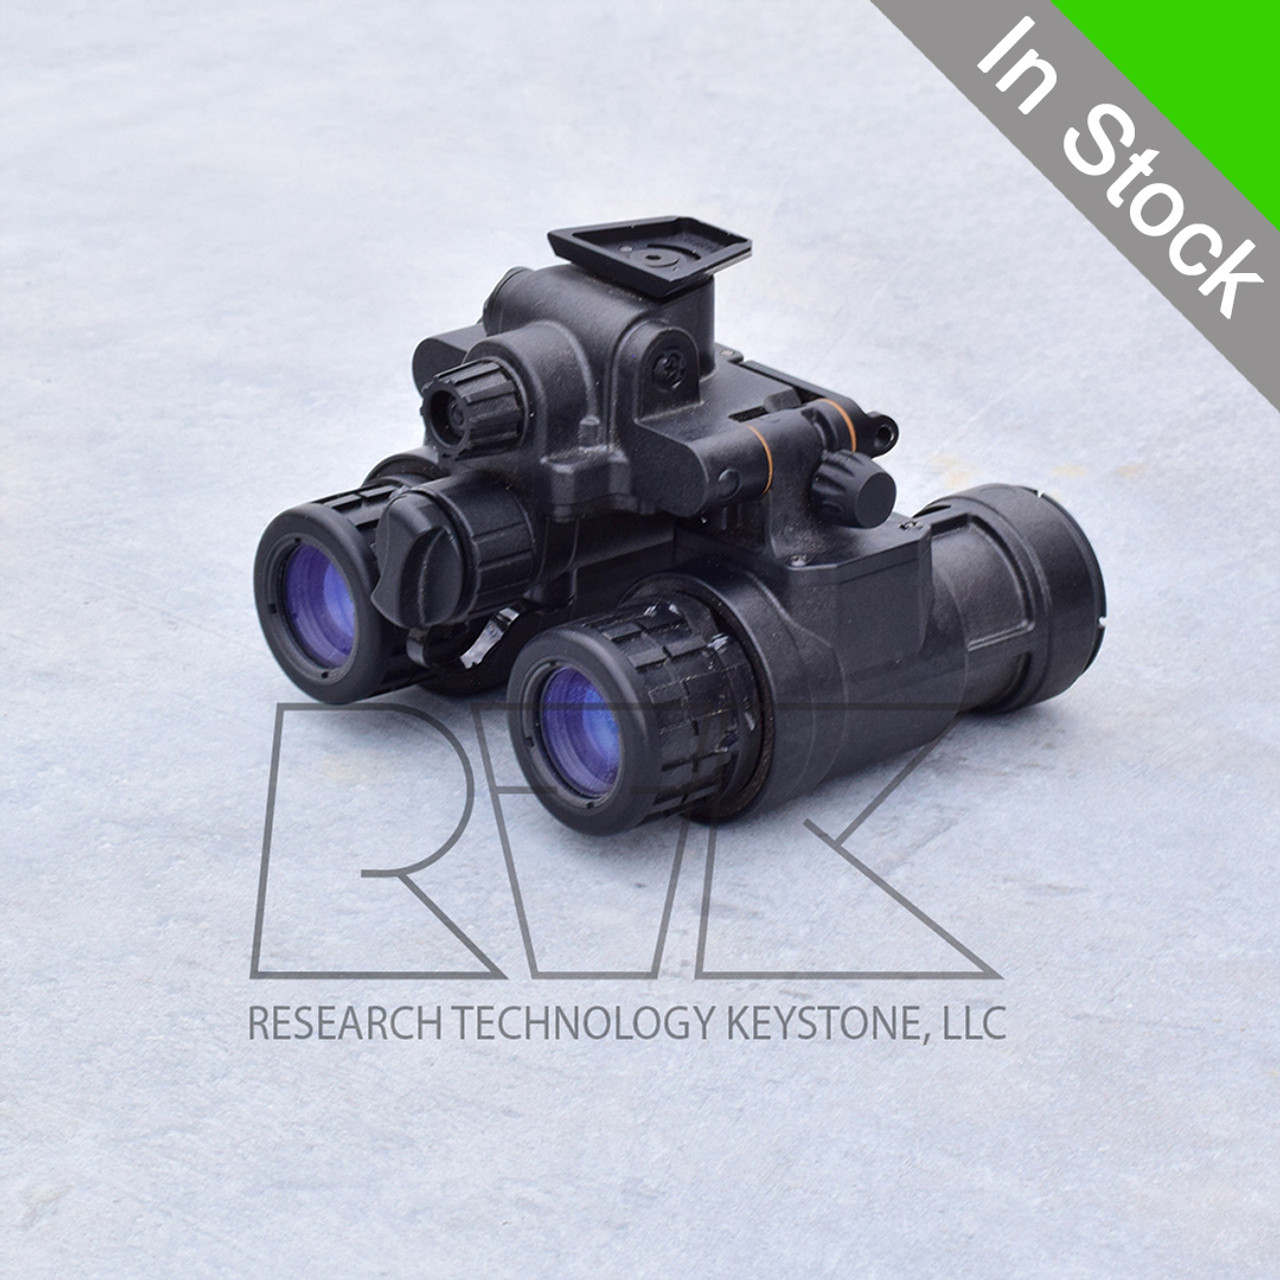 Binocular Night Vision Device (BNVD) - Fused